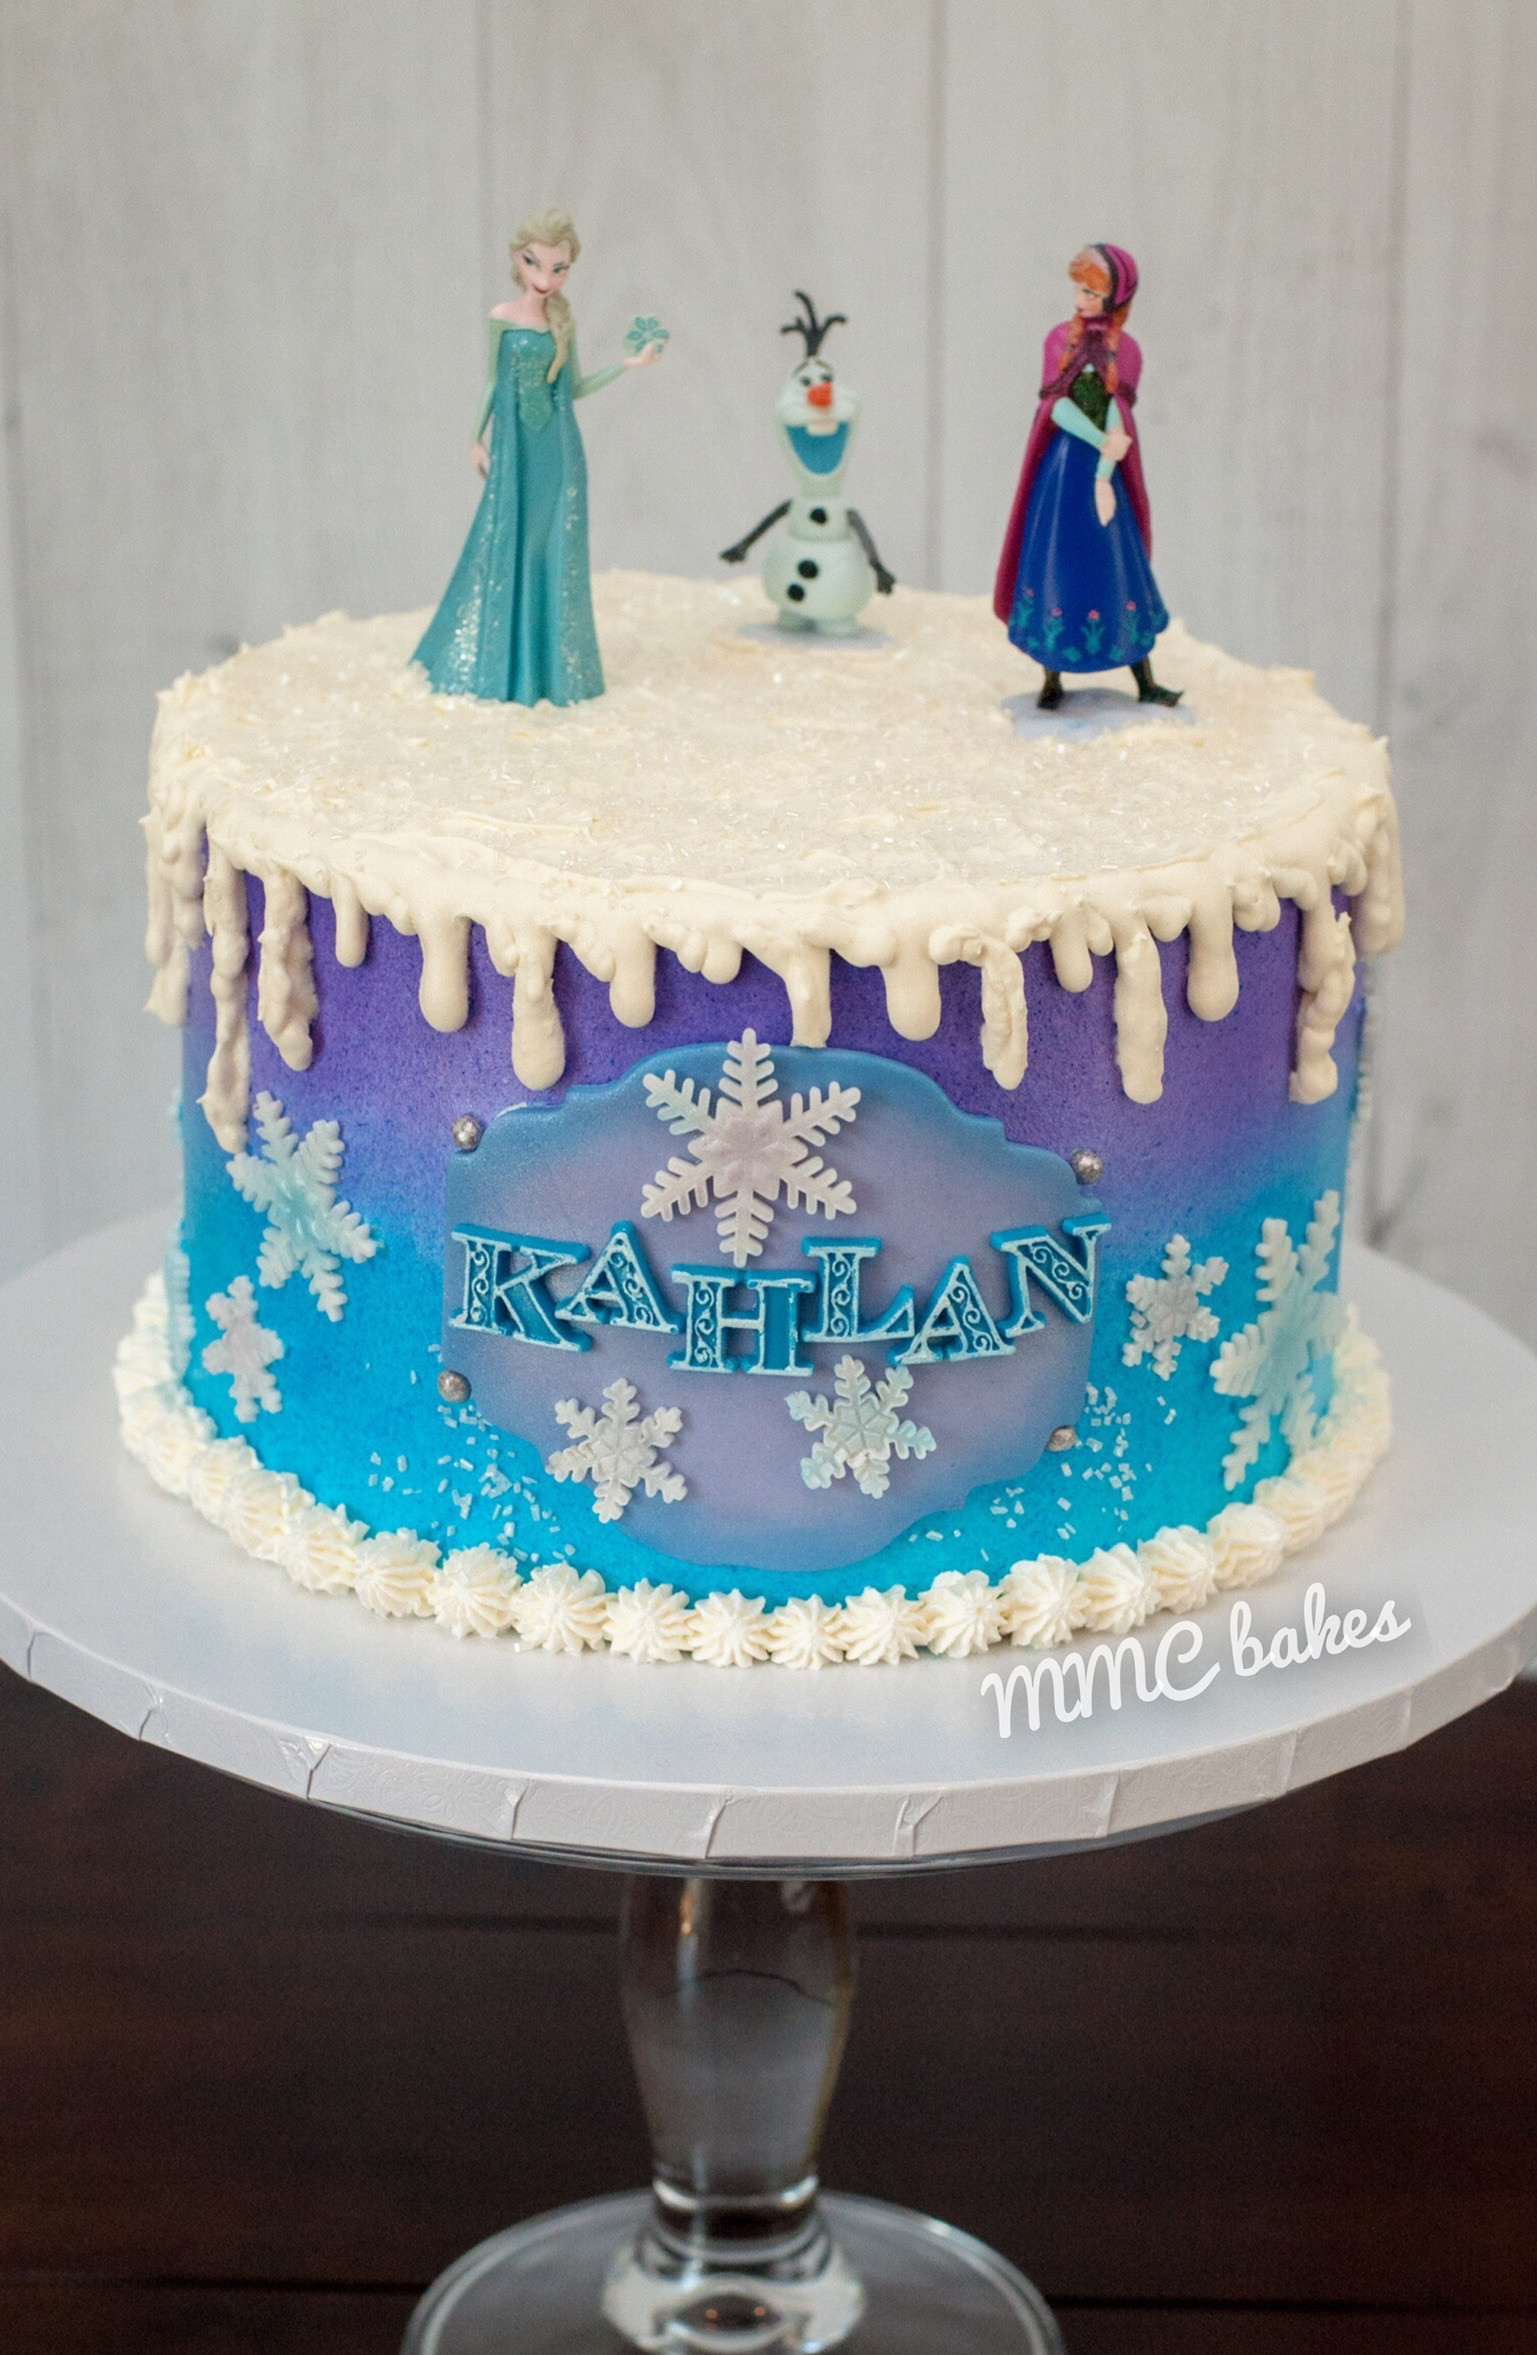 Best ideas about Frozen Birthday Cake
. Save or Pin Frozen Birthday Cake – MMC Bakes Now.